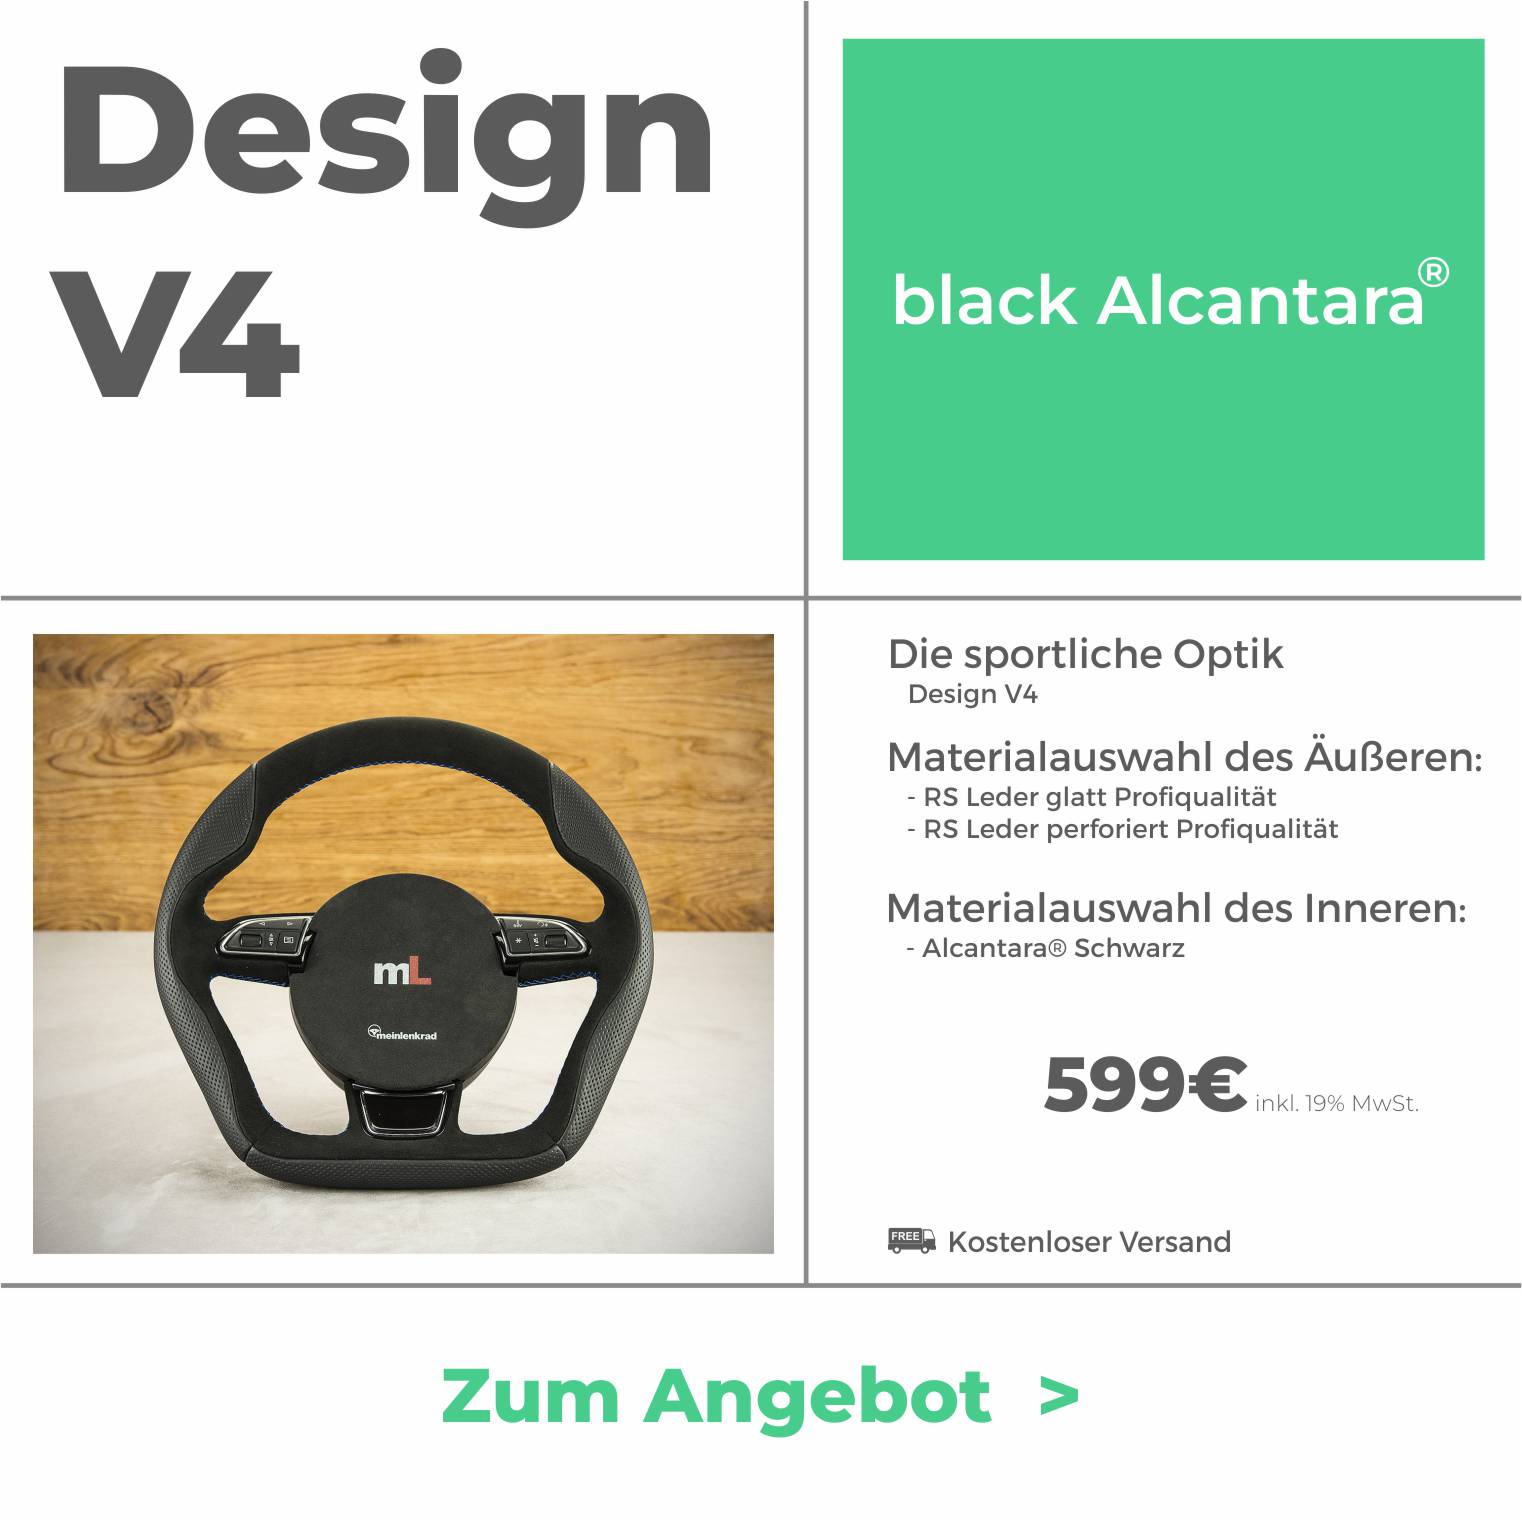 Design V4 - black Alcantara